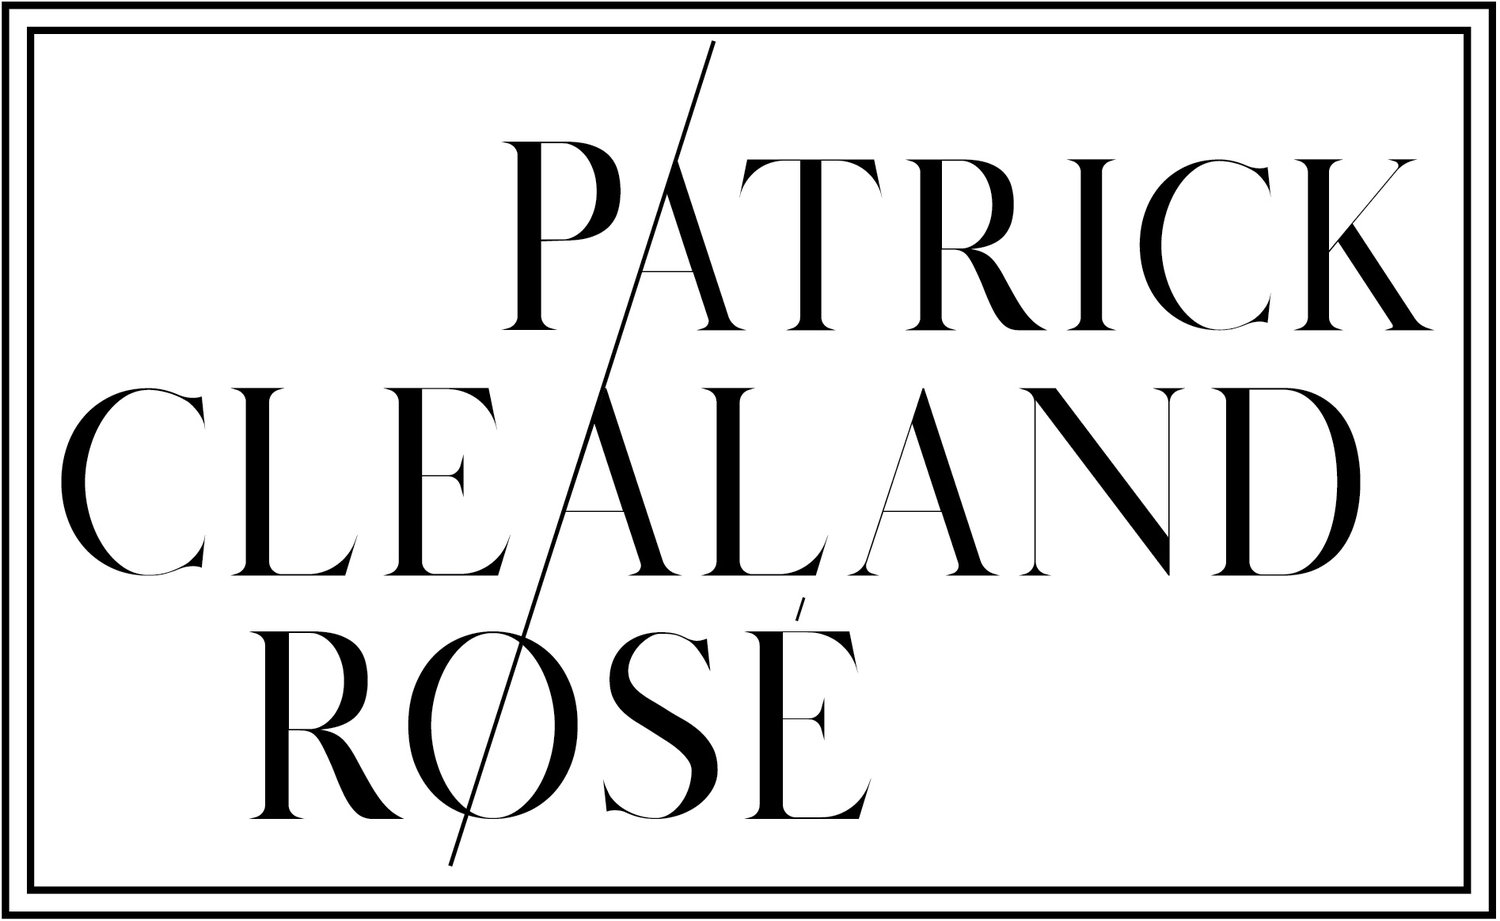 Patrick Clealand Rosé